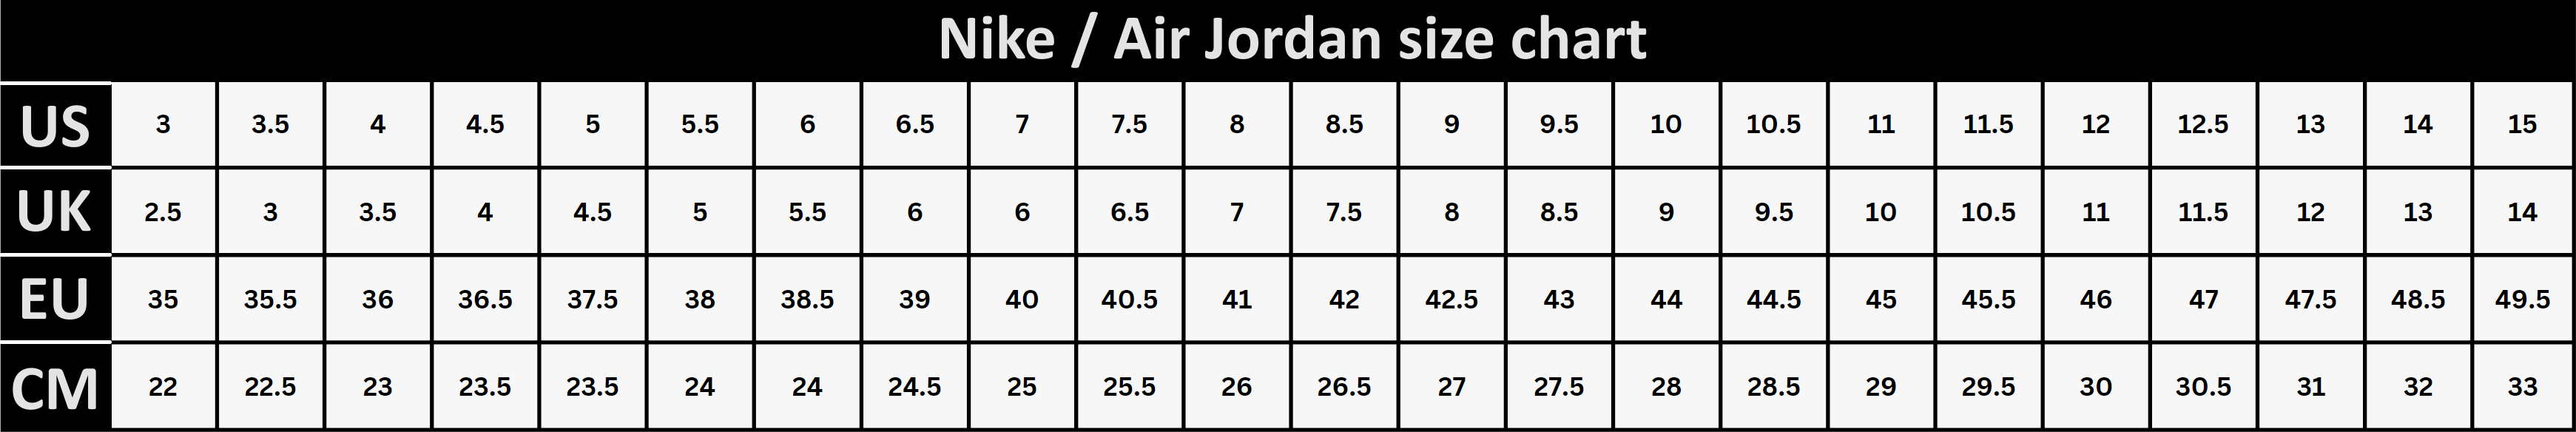 Air Jodan Nike - size chart